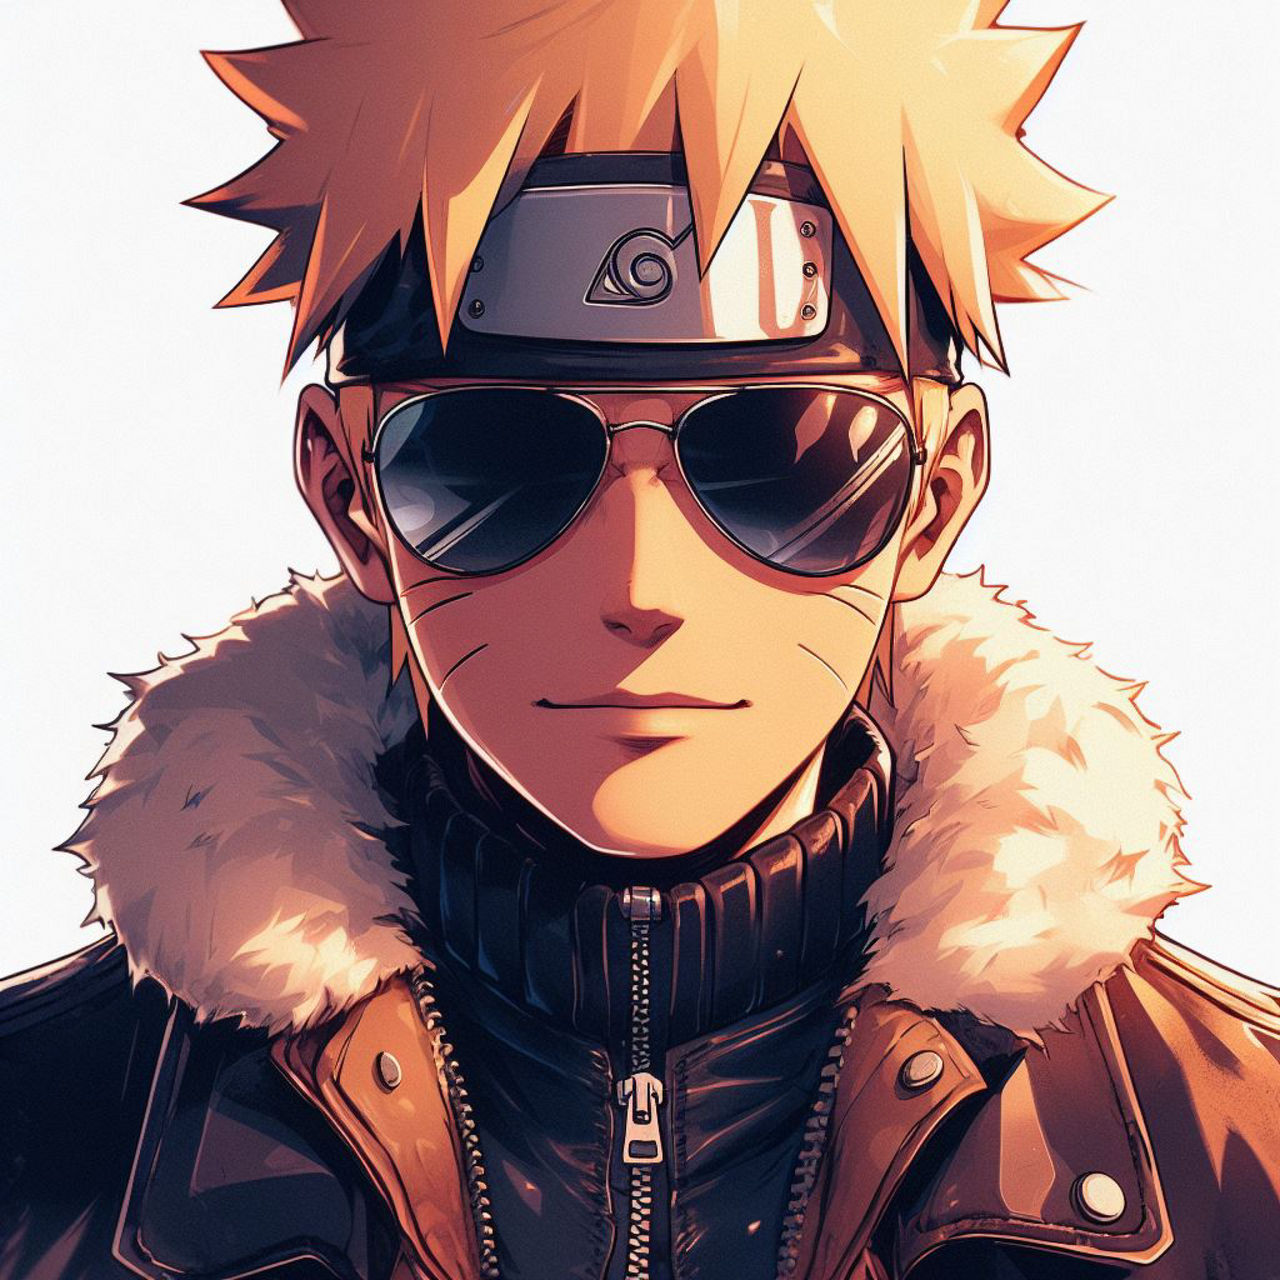 Naruto profile 2 by ChocoCandy1 on DeviantArt